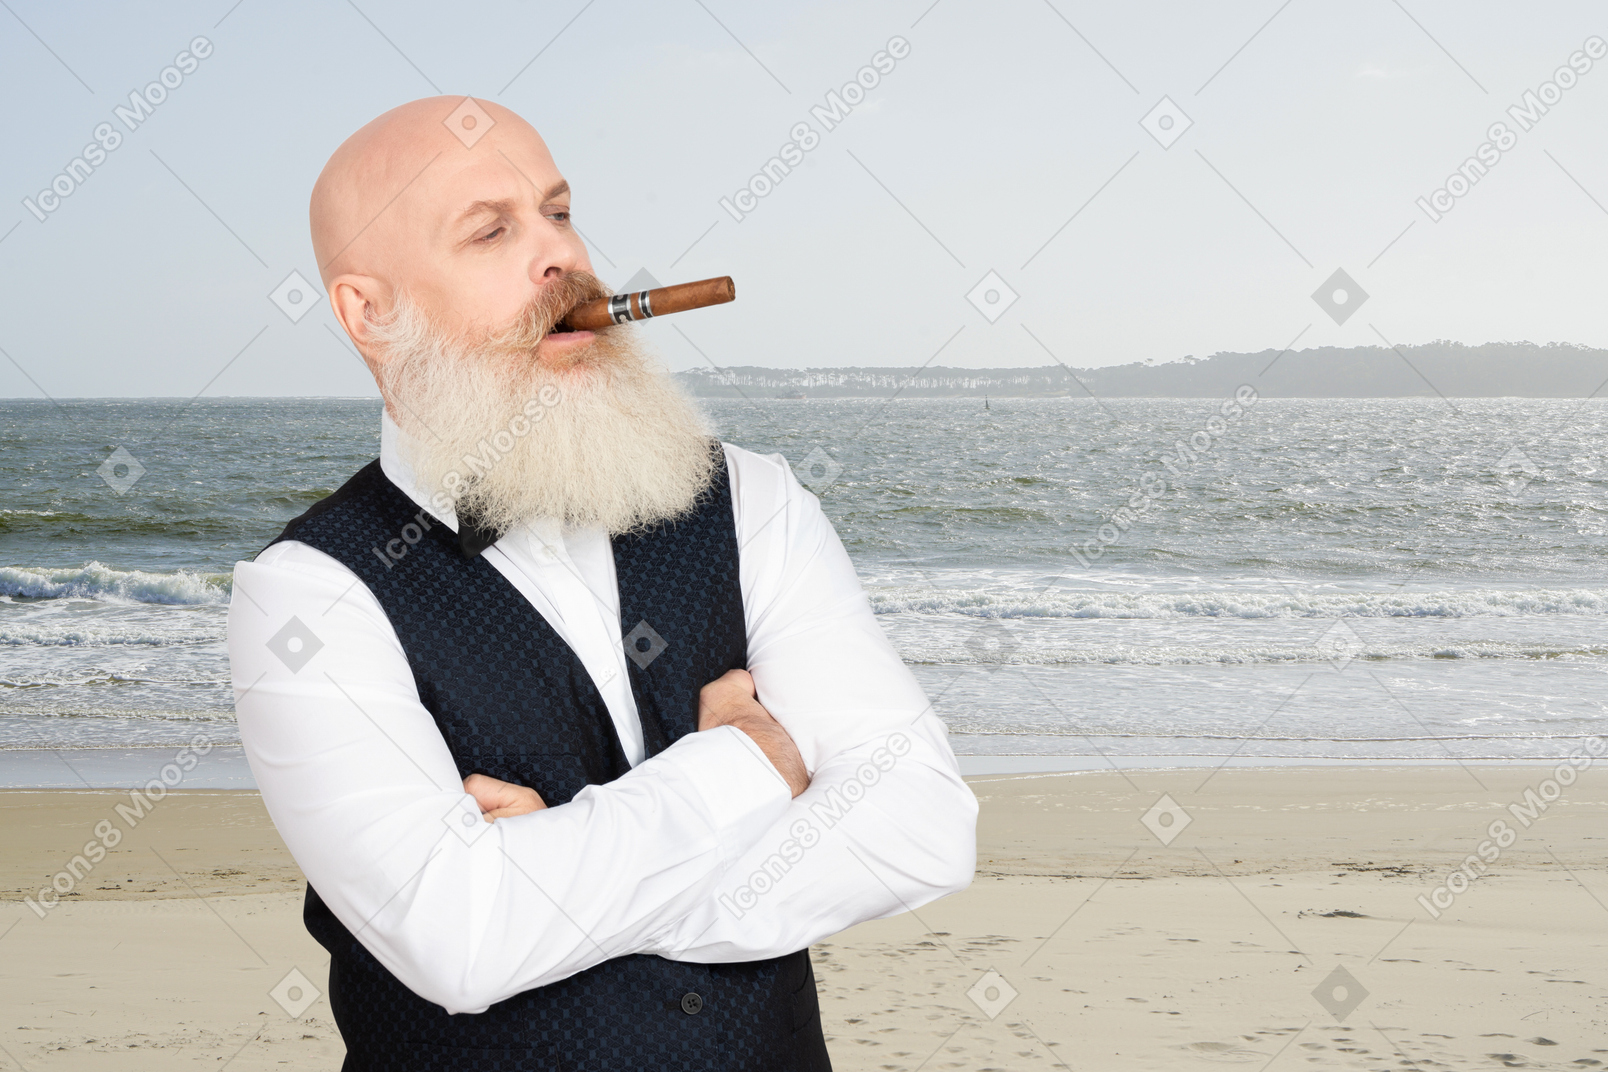 Elderly man smoking a cigar